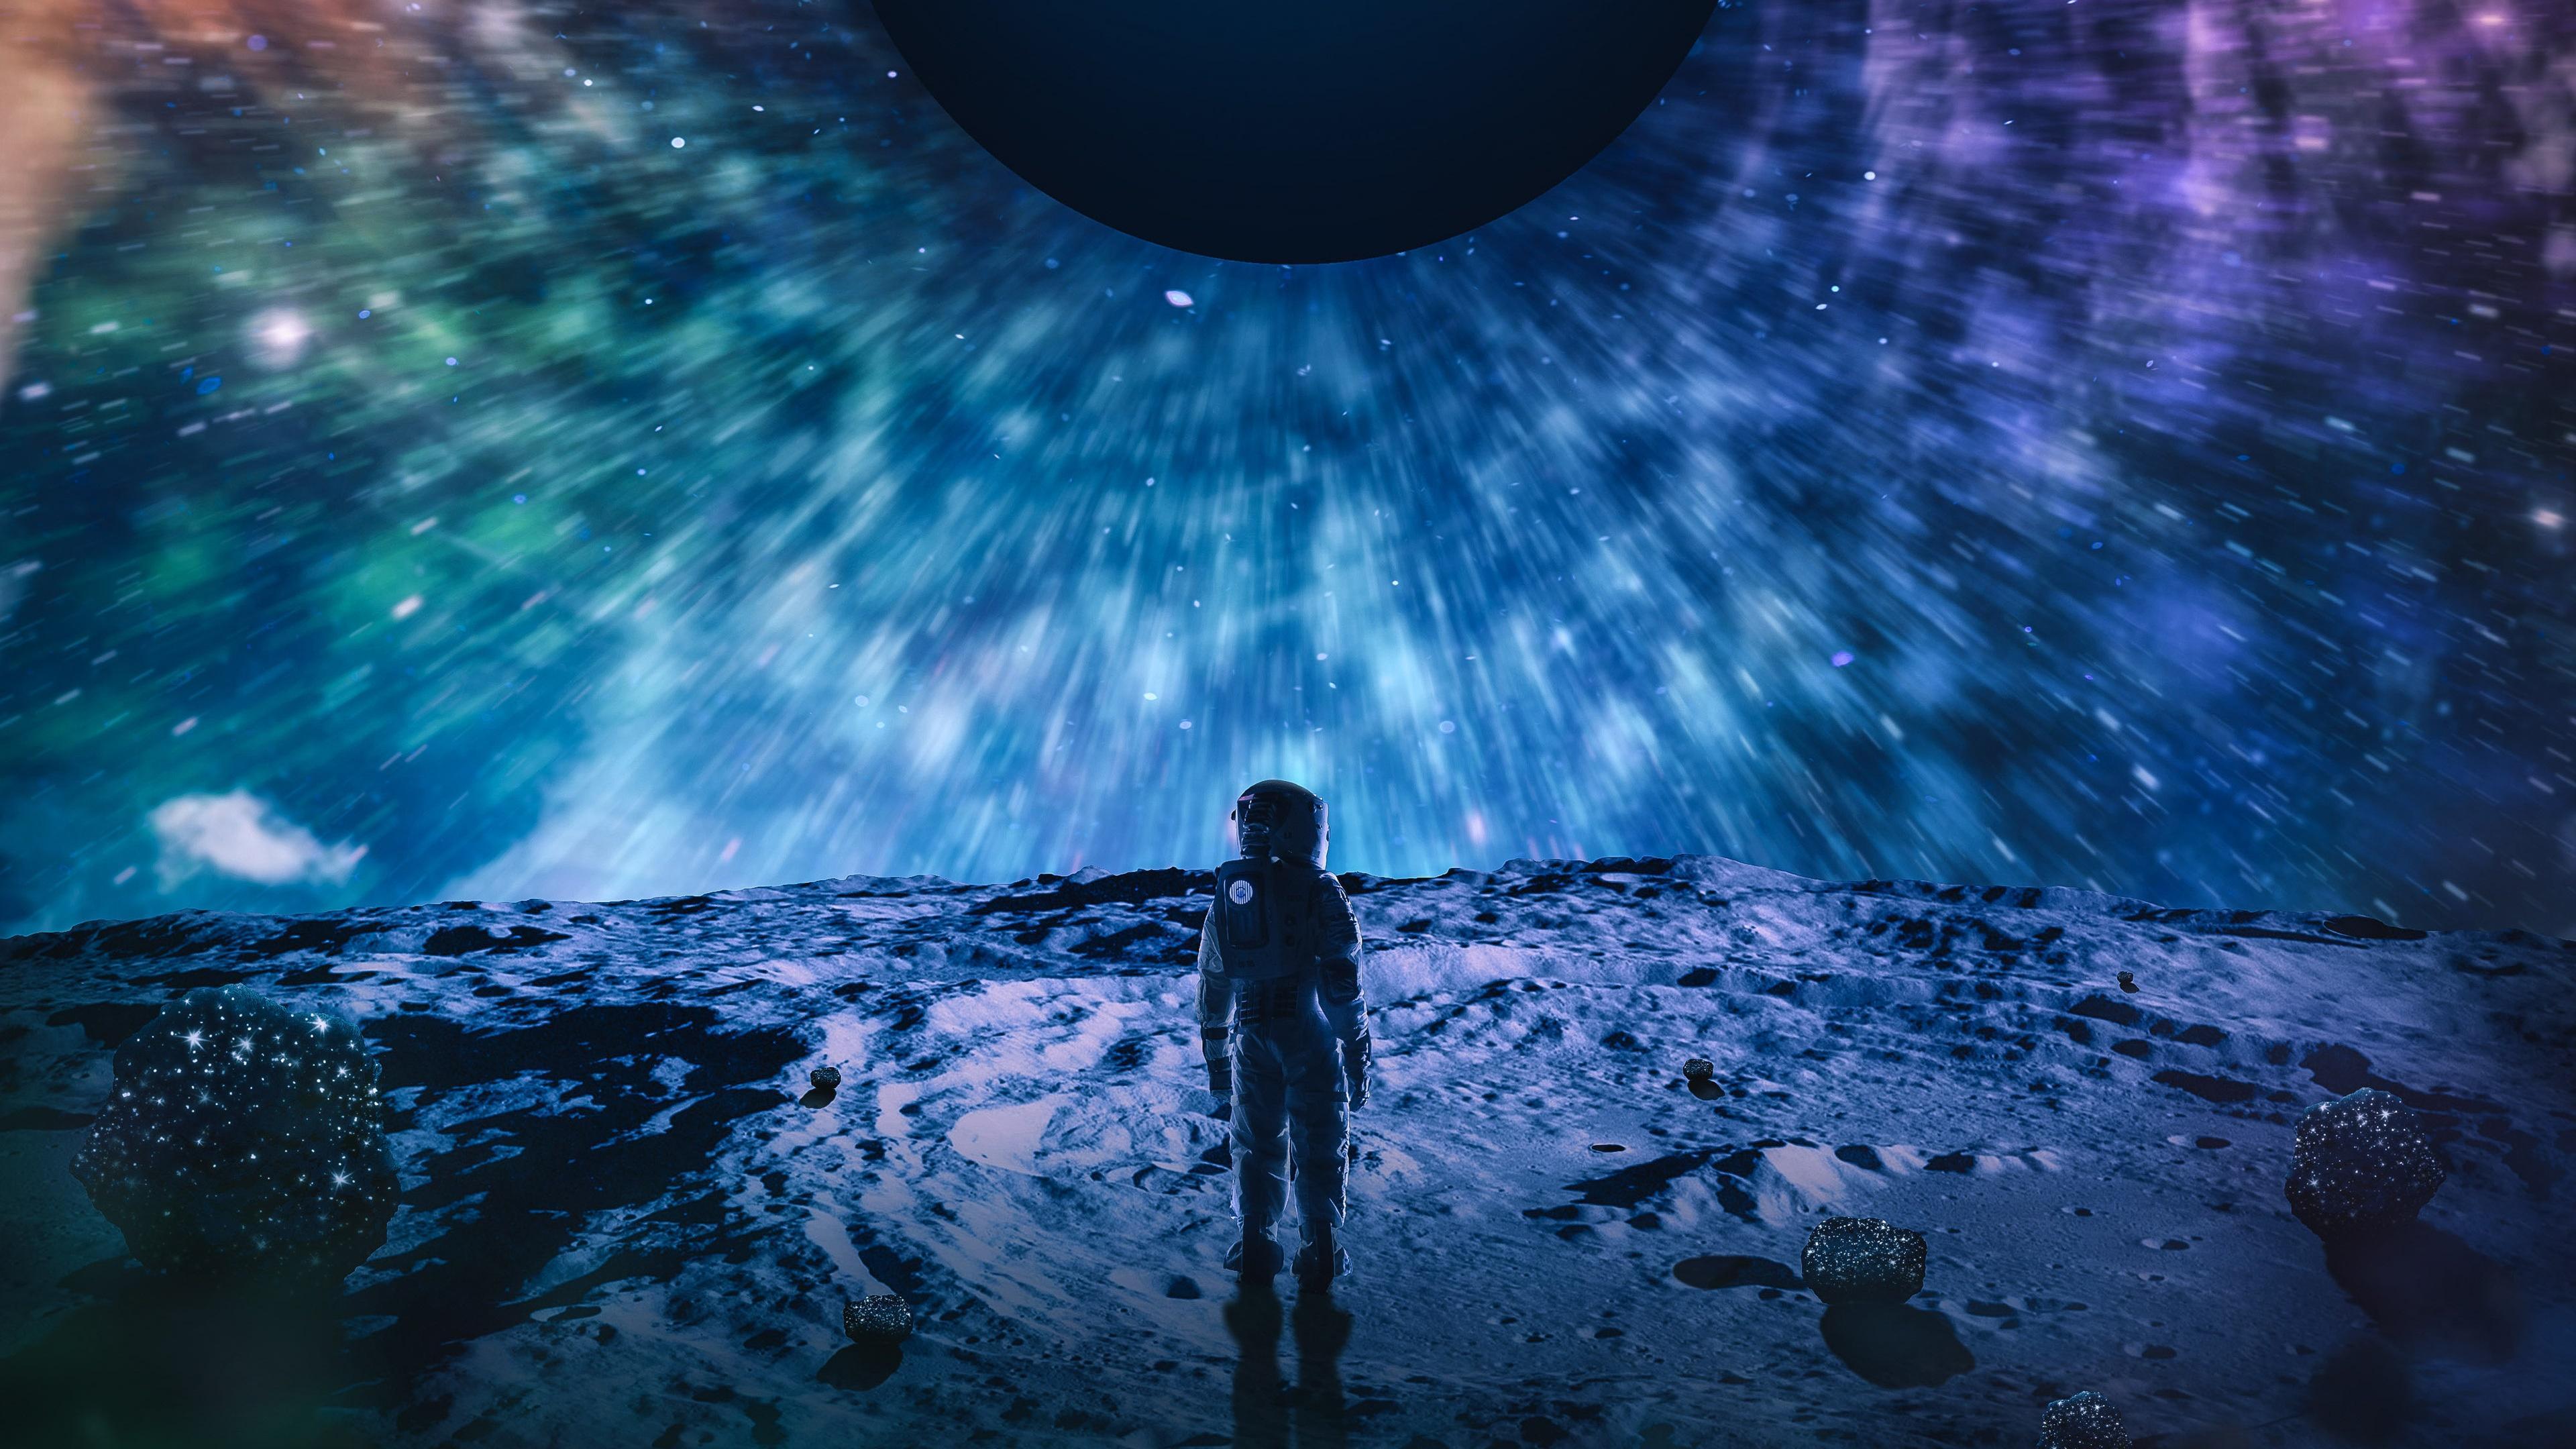 HD wallpaper, Astronaut, Space, 4K, Cosmos, Planet, Digital Art